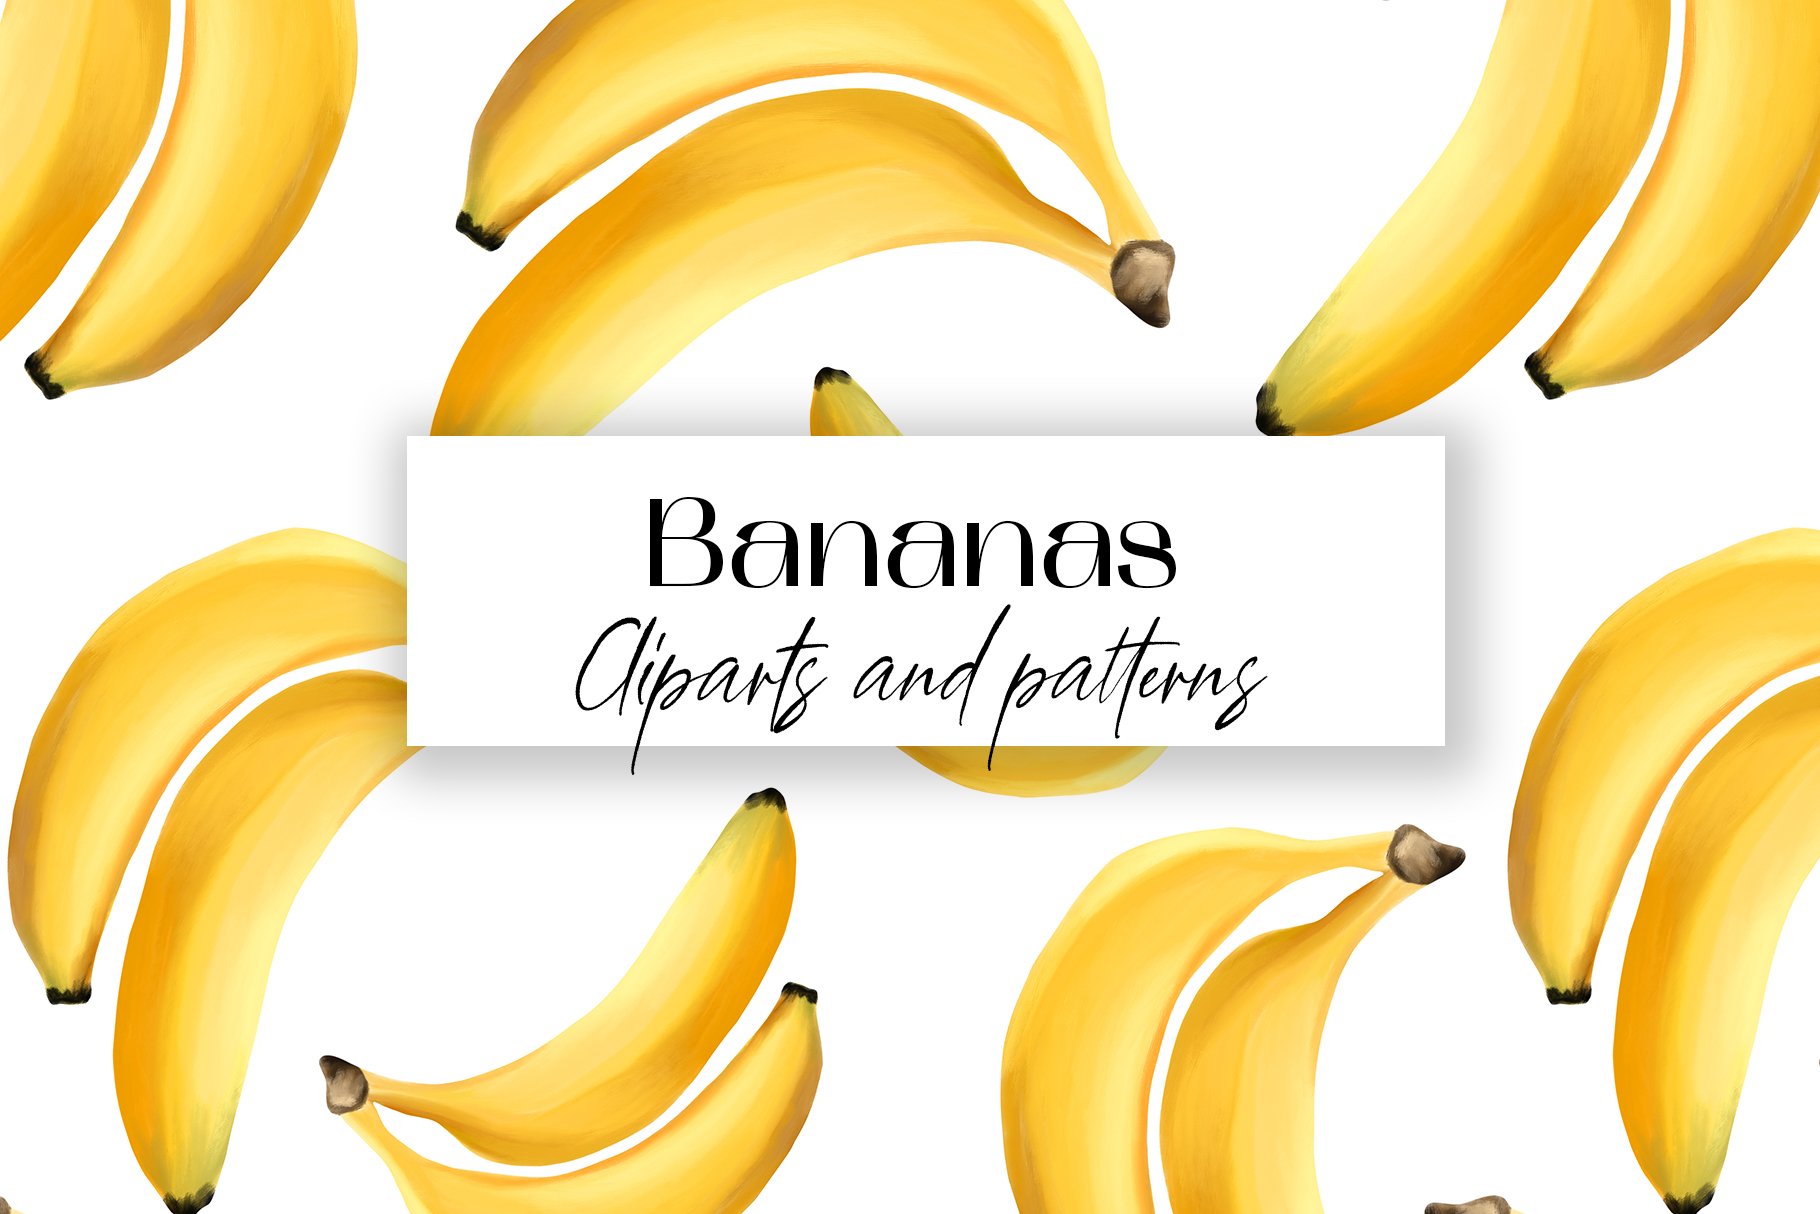 Bananas cover image.